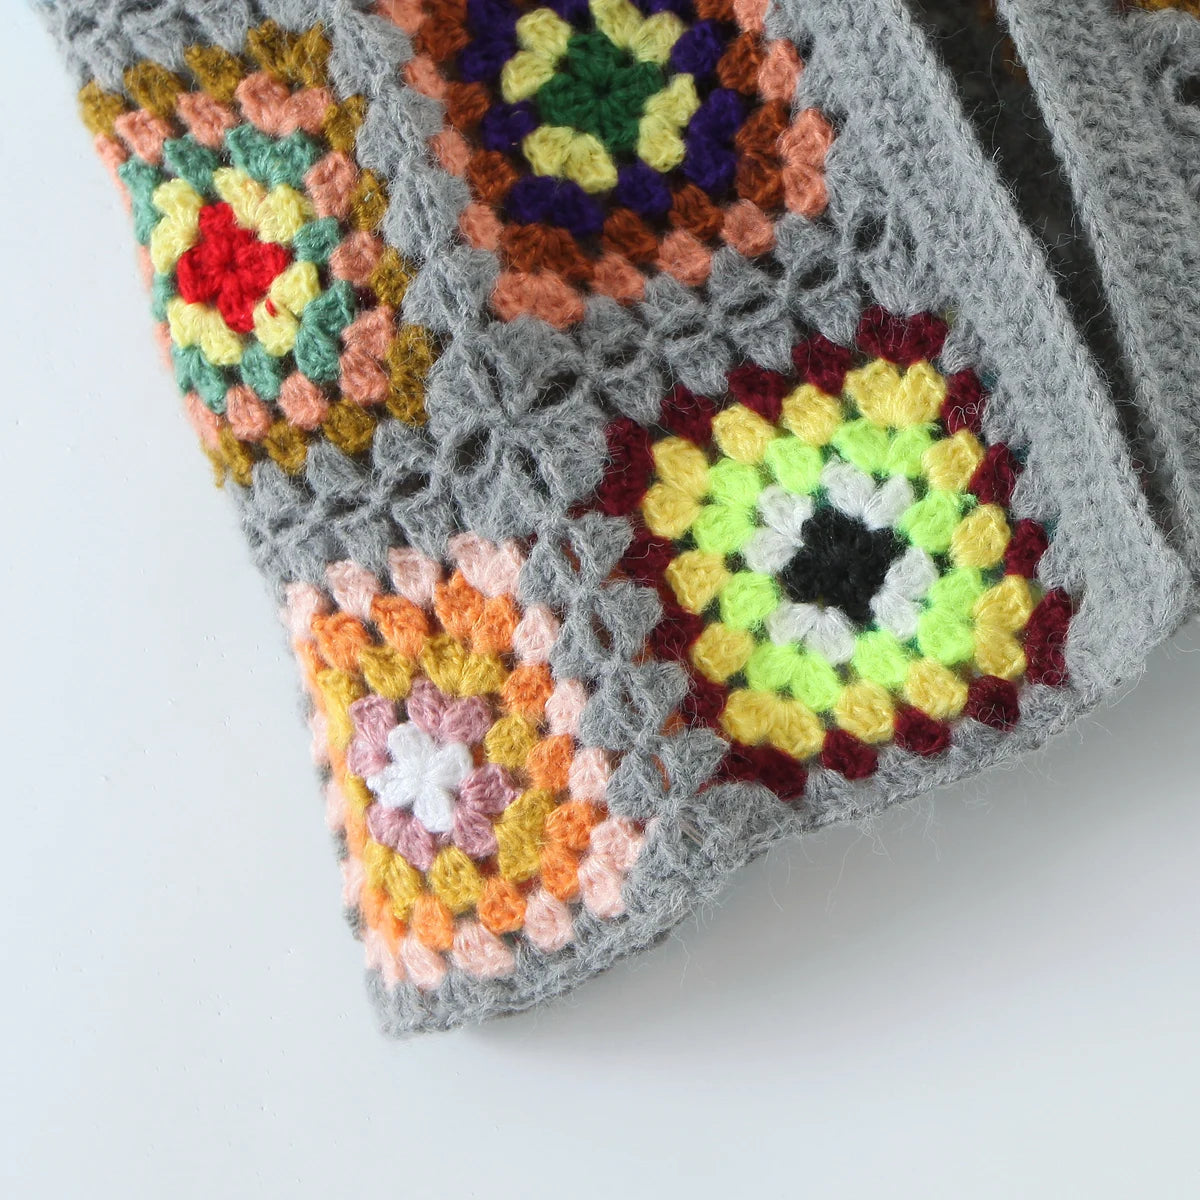 Bohemia Vintage Colored Plaid Flower Granny Square Hand Crochet Long Cardigan Coats & Jackets jehouze 